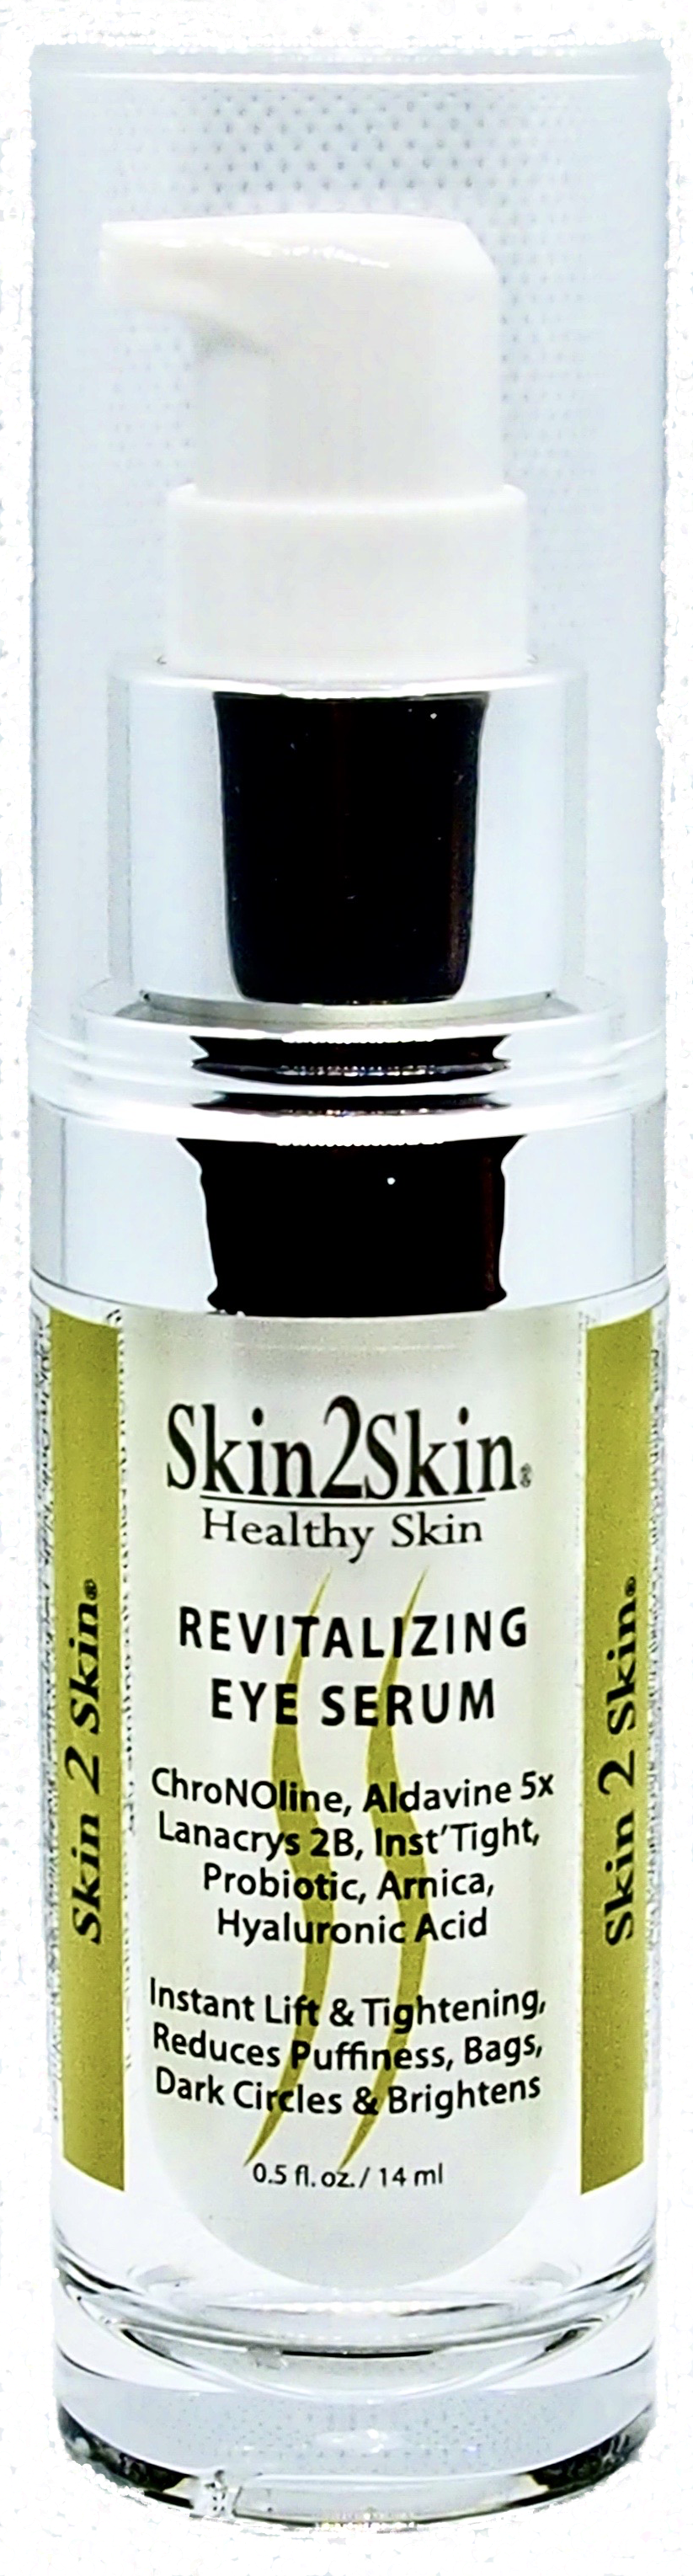 Skin2Skin Revitalizing Eye Serum